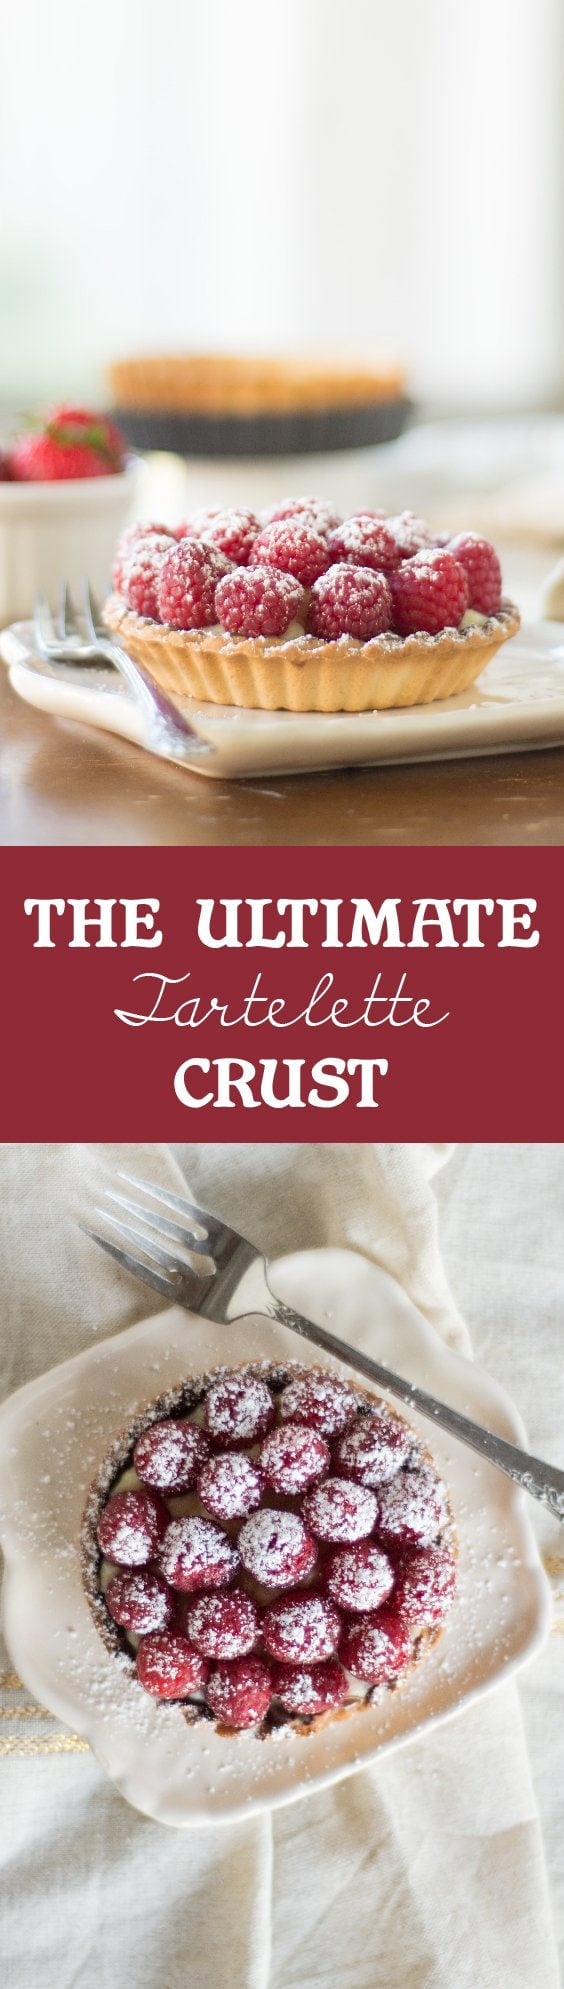 The Ultimate Tartelette Crust